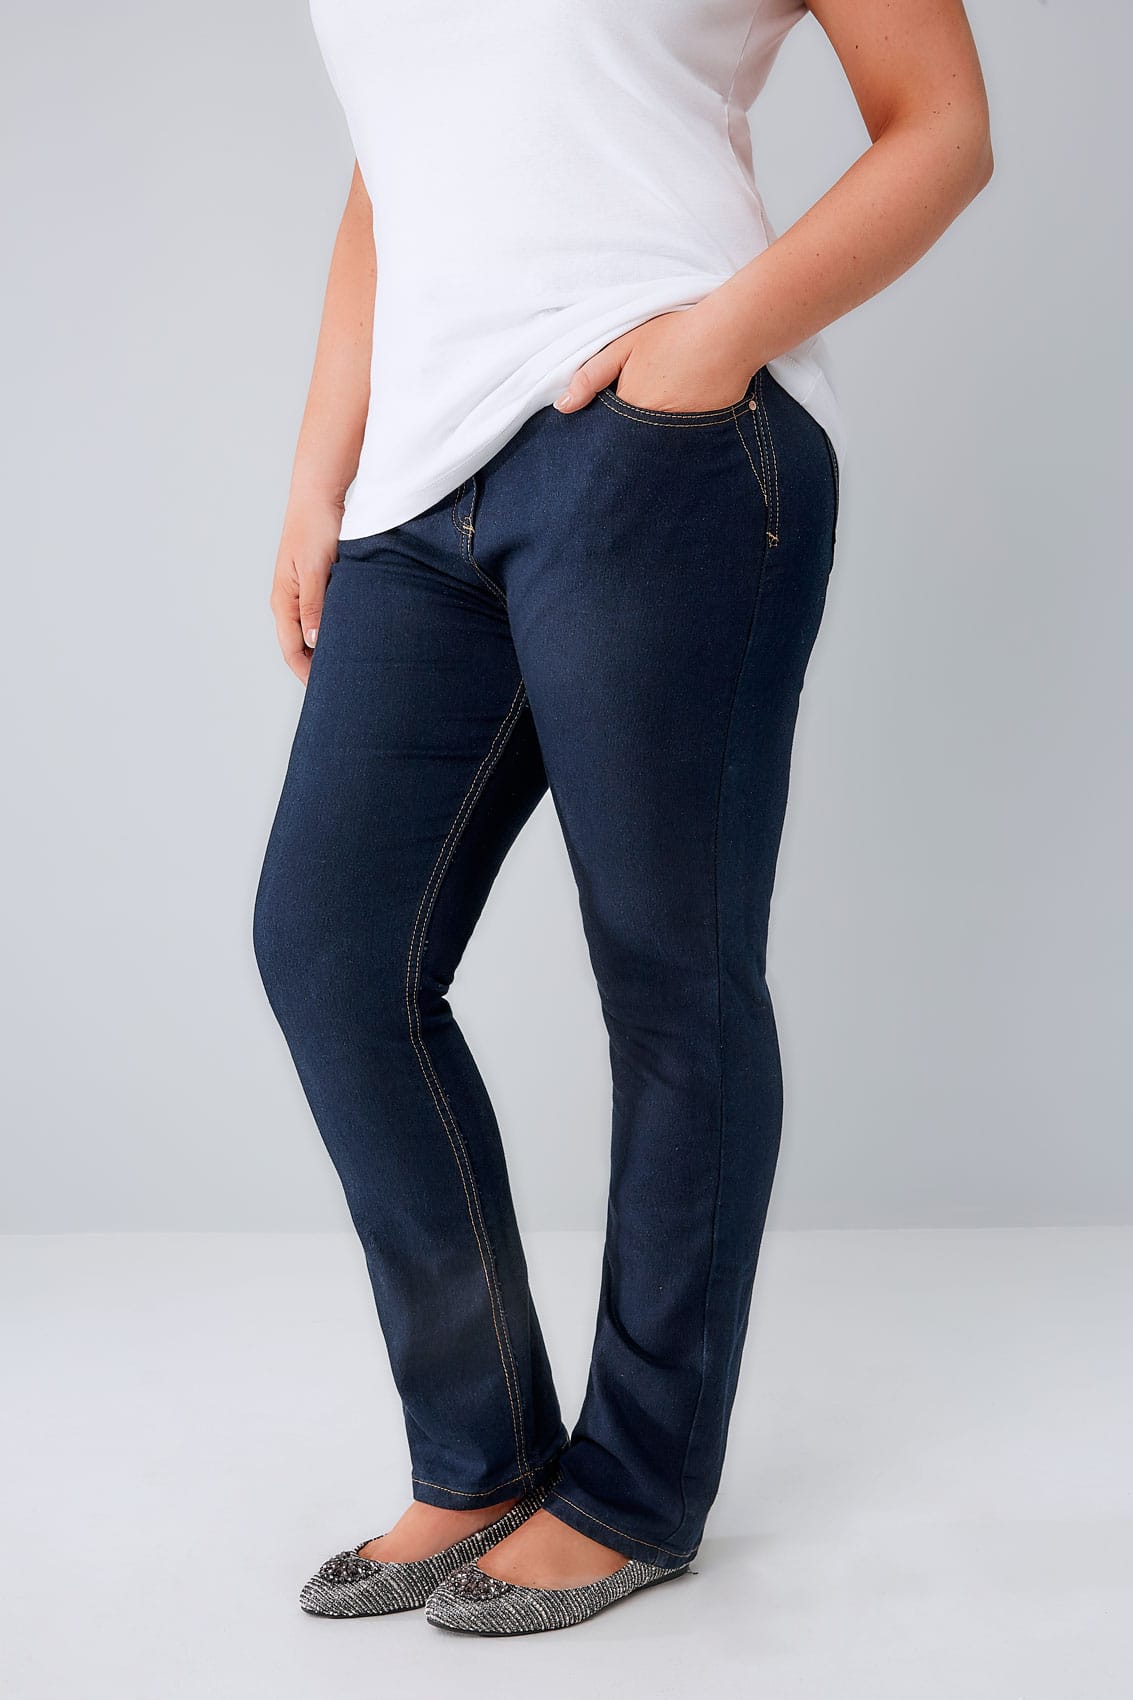 Indigo Blue Straight Leg RUBY Jeans Plus size 14 to 36